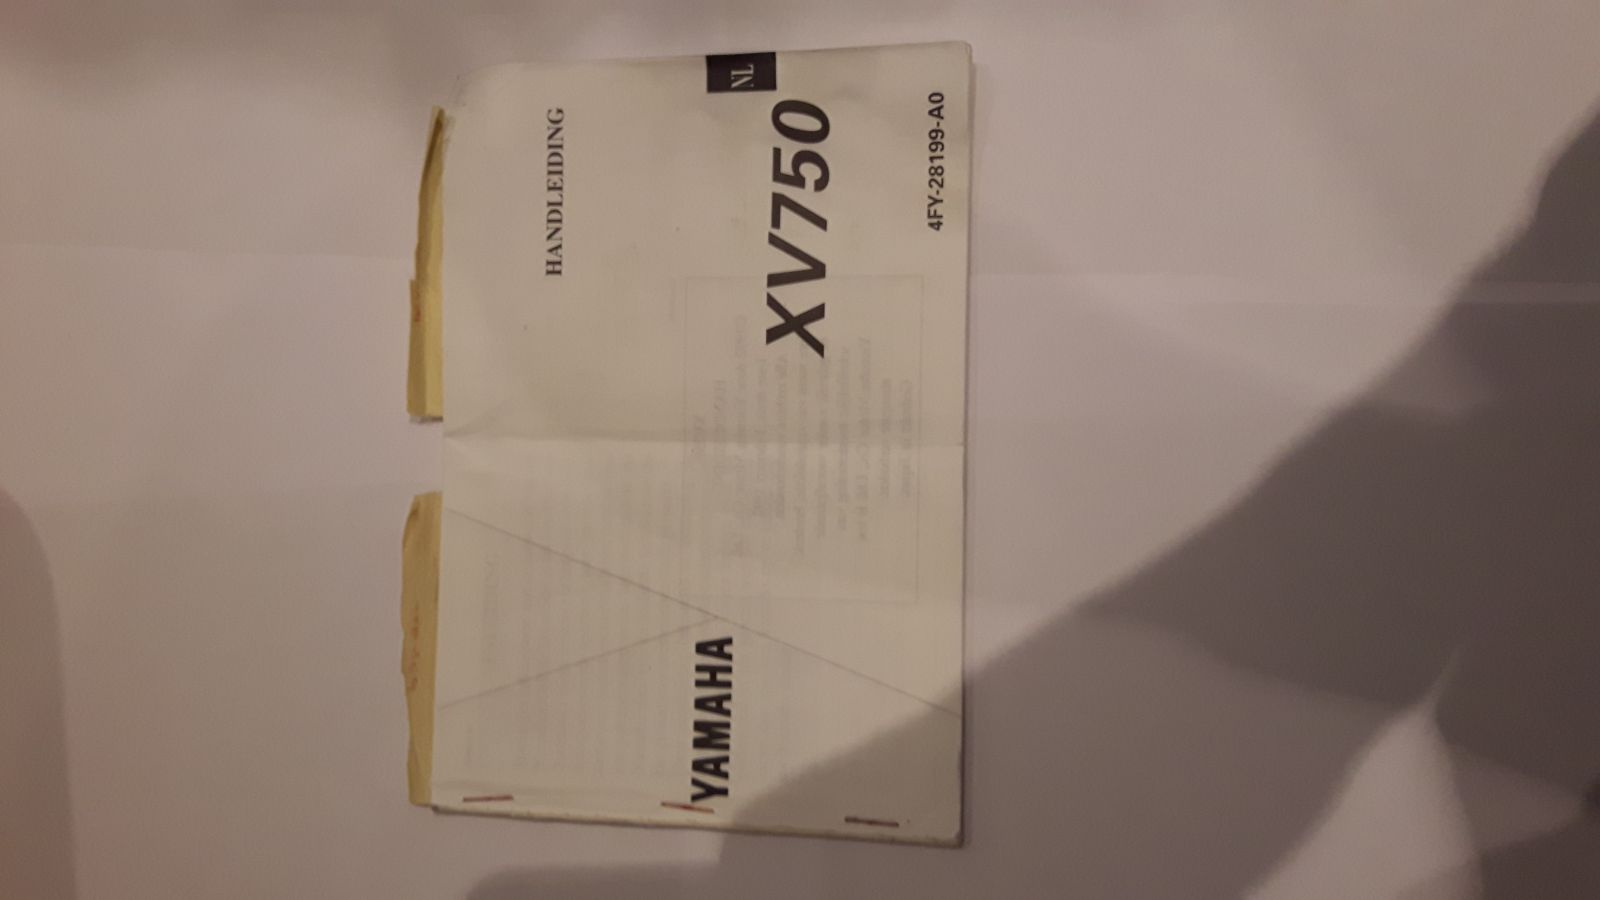 Yamaha XV750 instructieboek